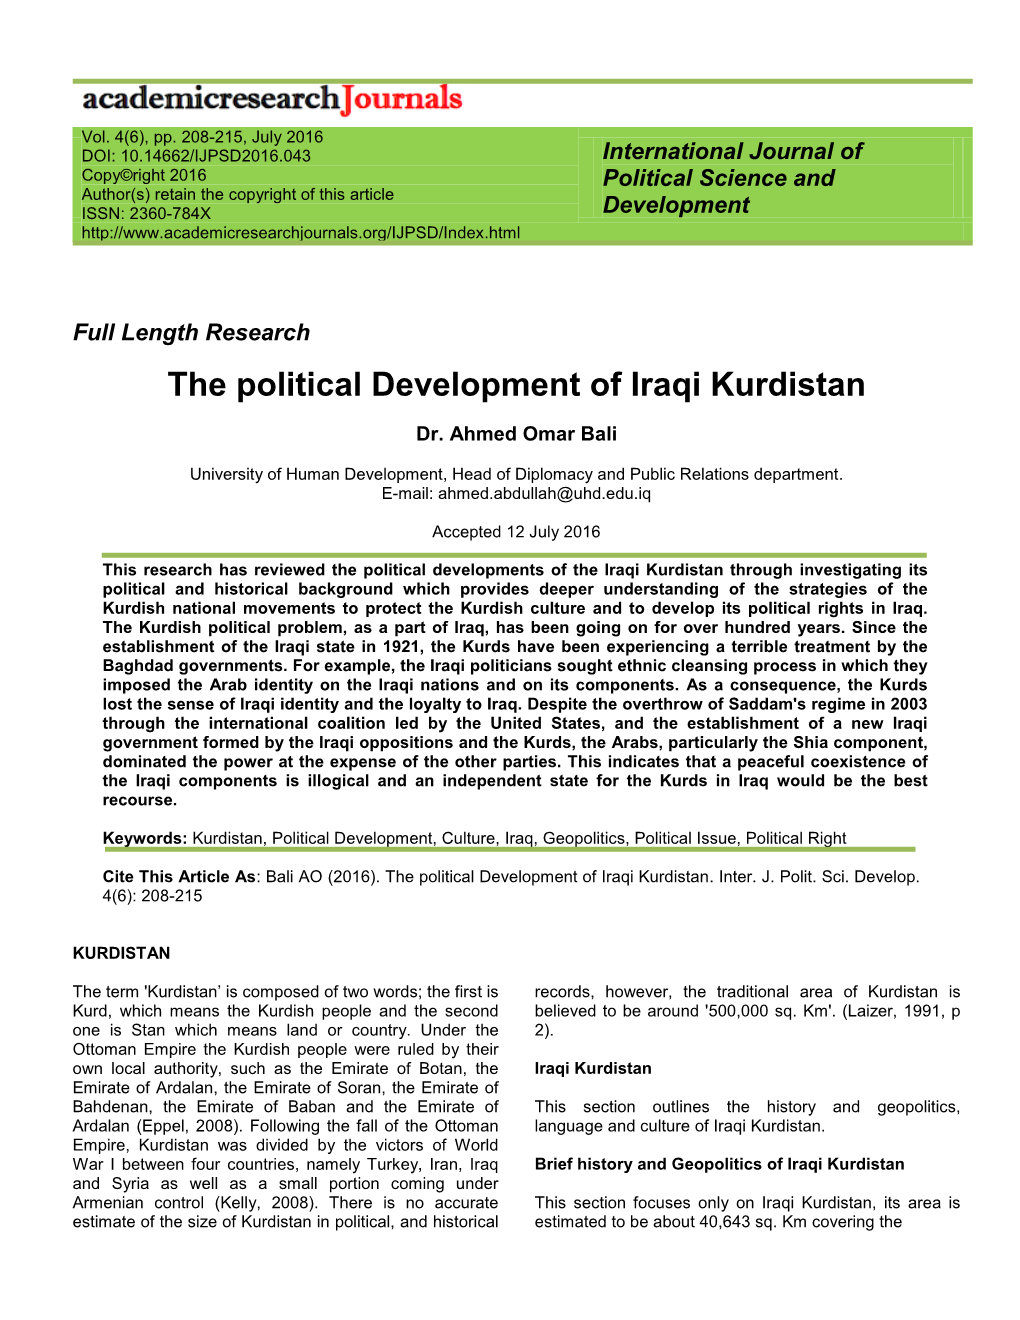 The Political Development of Iraqi Kurdistan